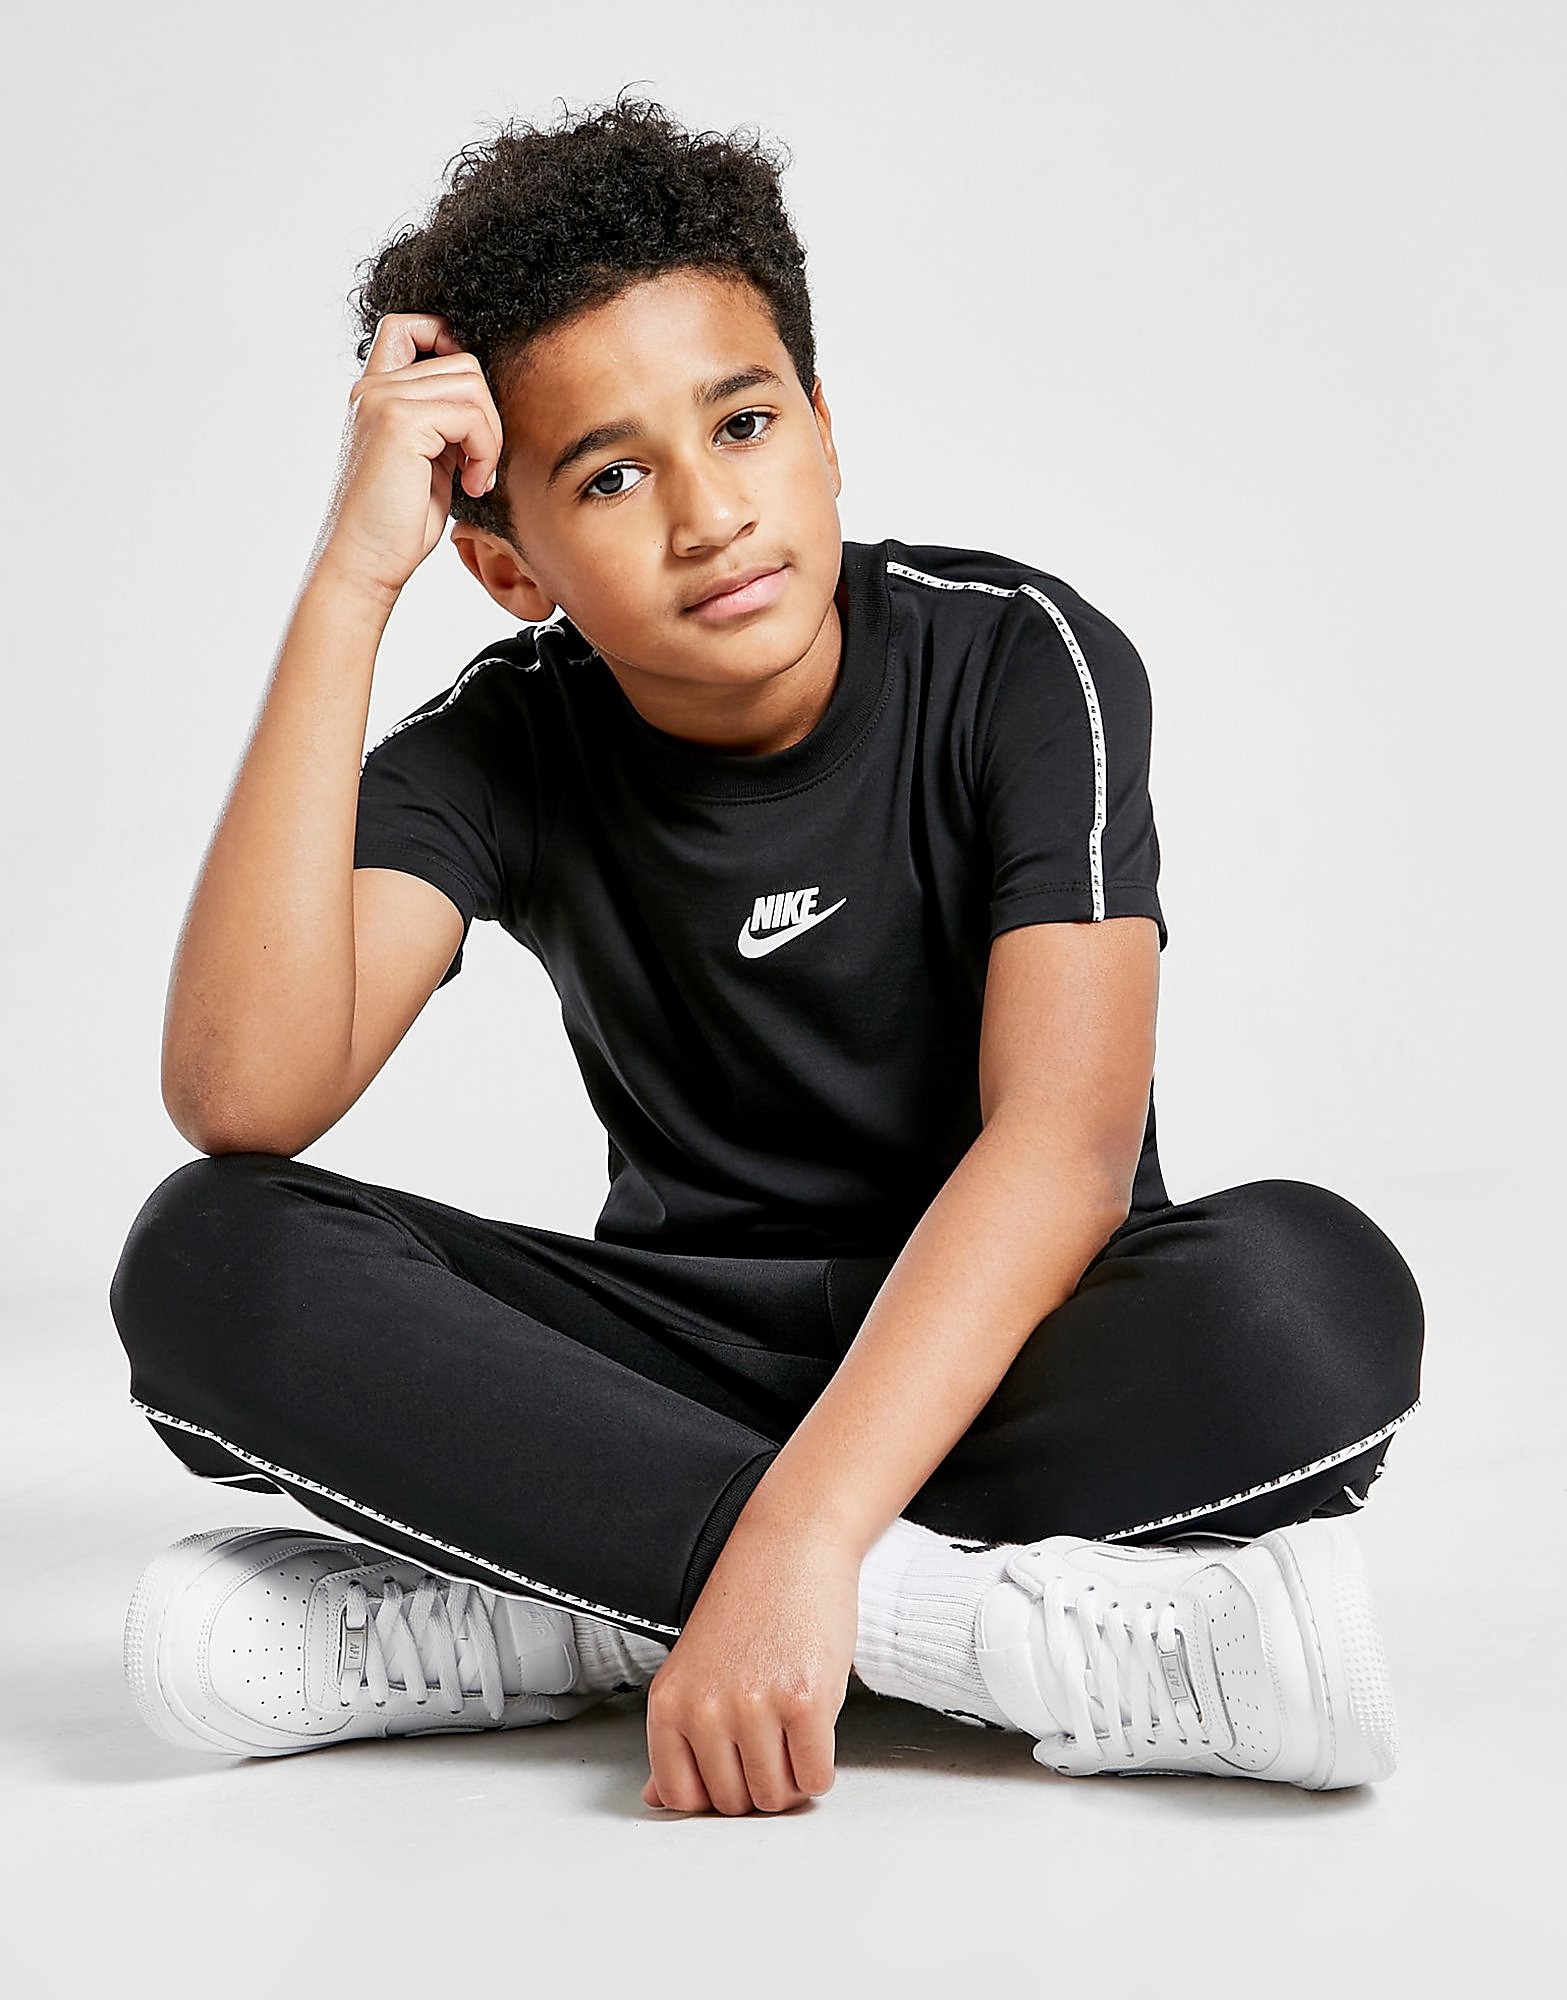 Nike Tape T-Shirt Junior - Black/White - Kids, Black/White